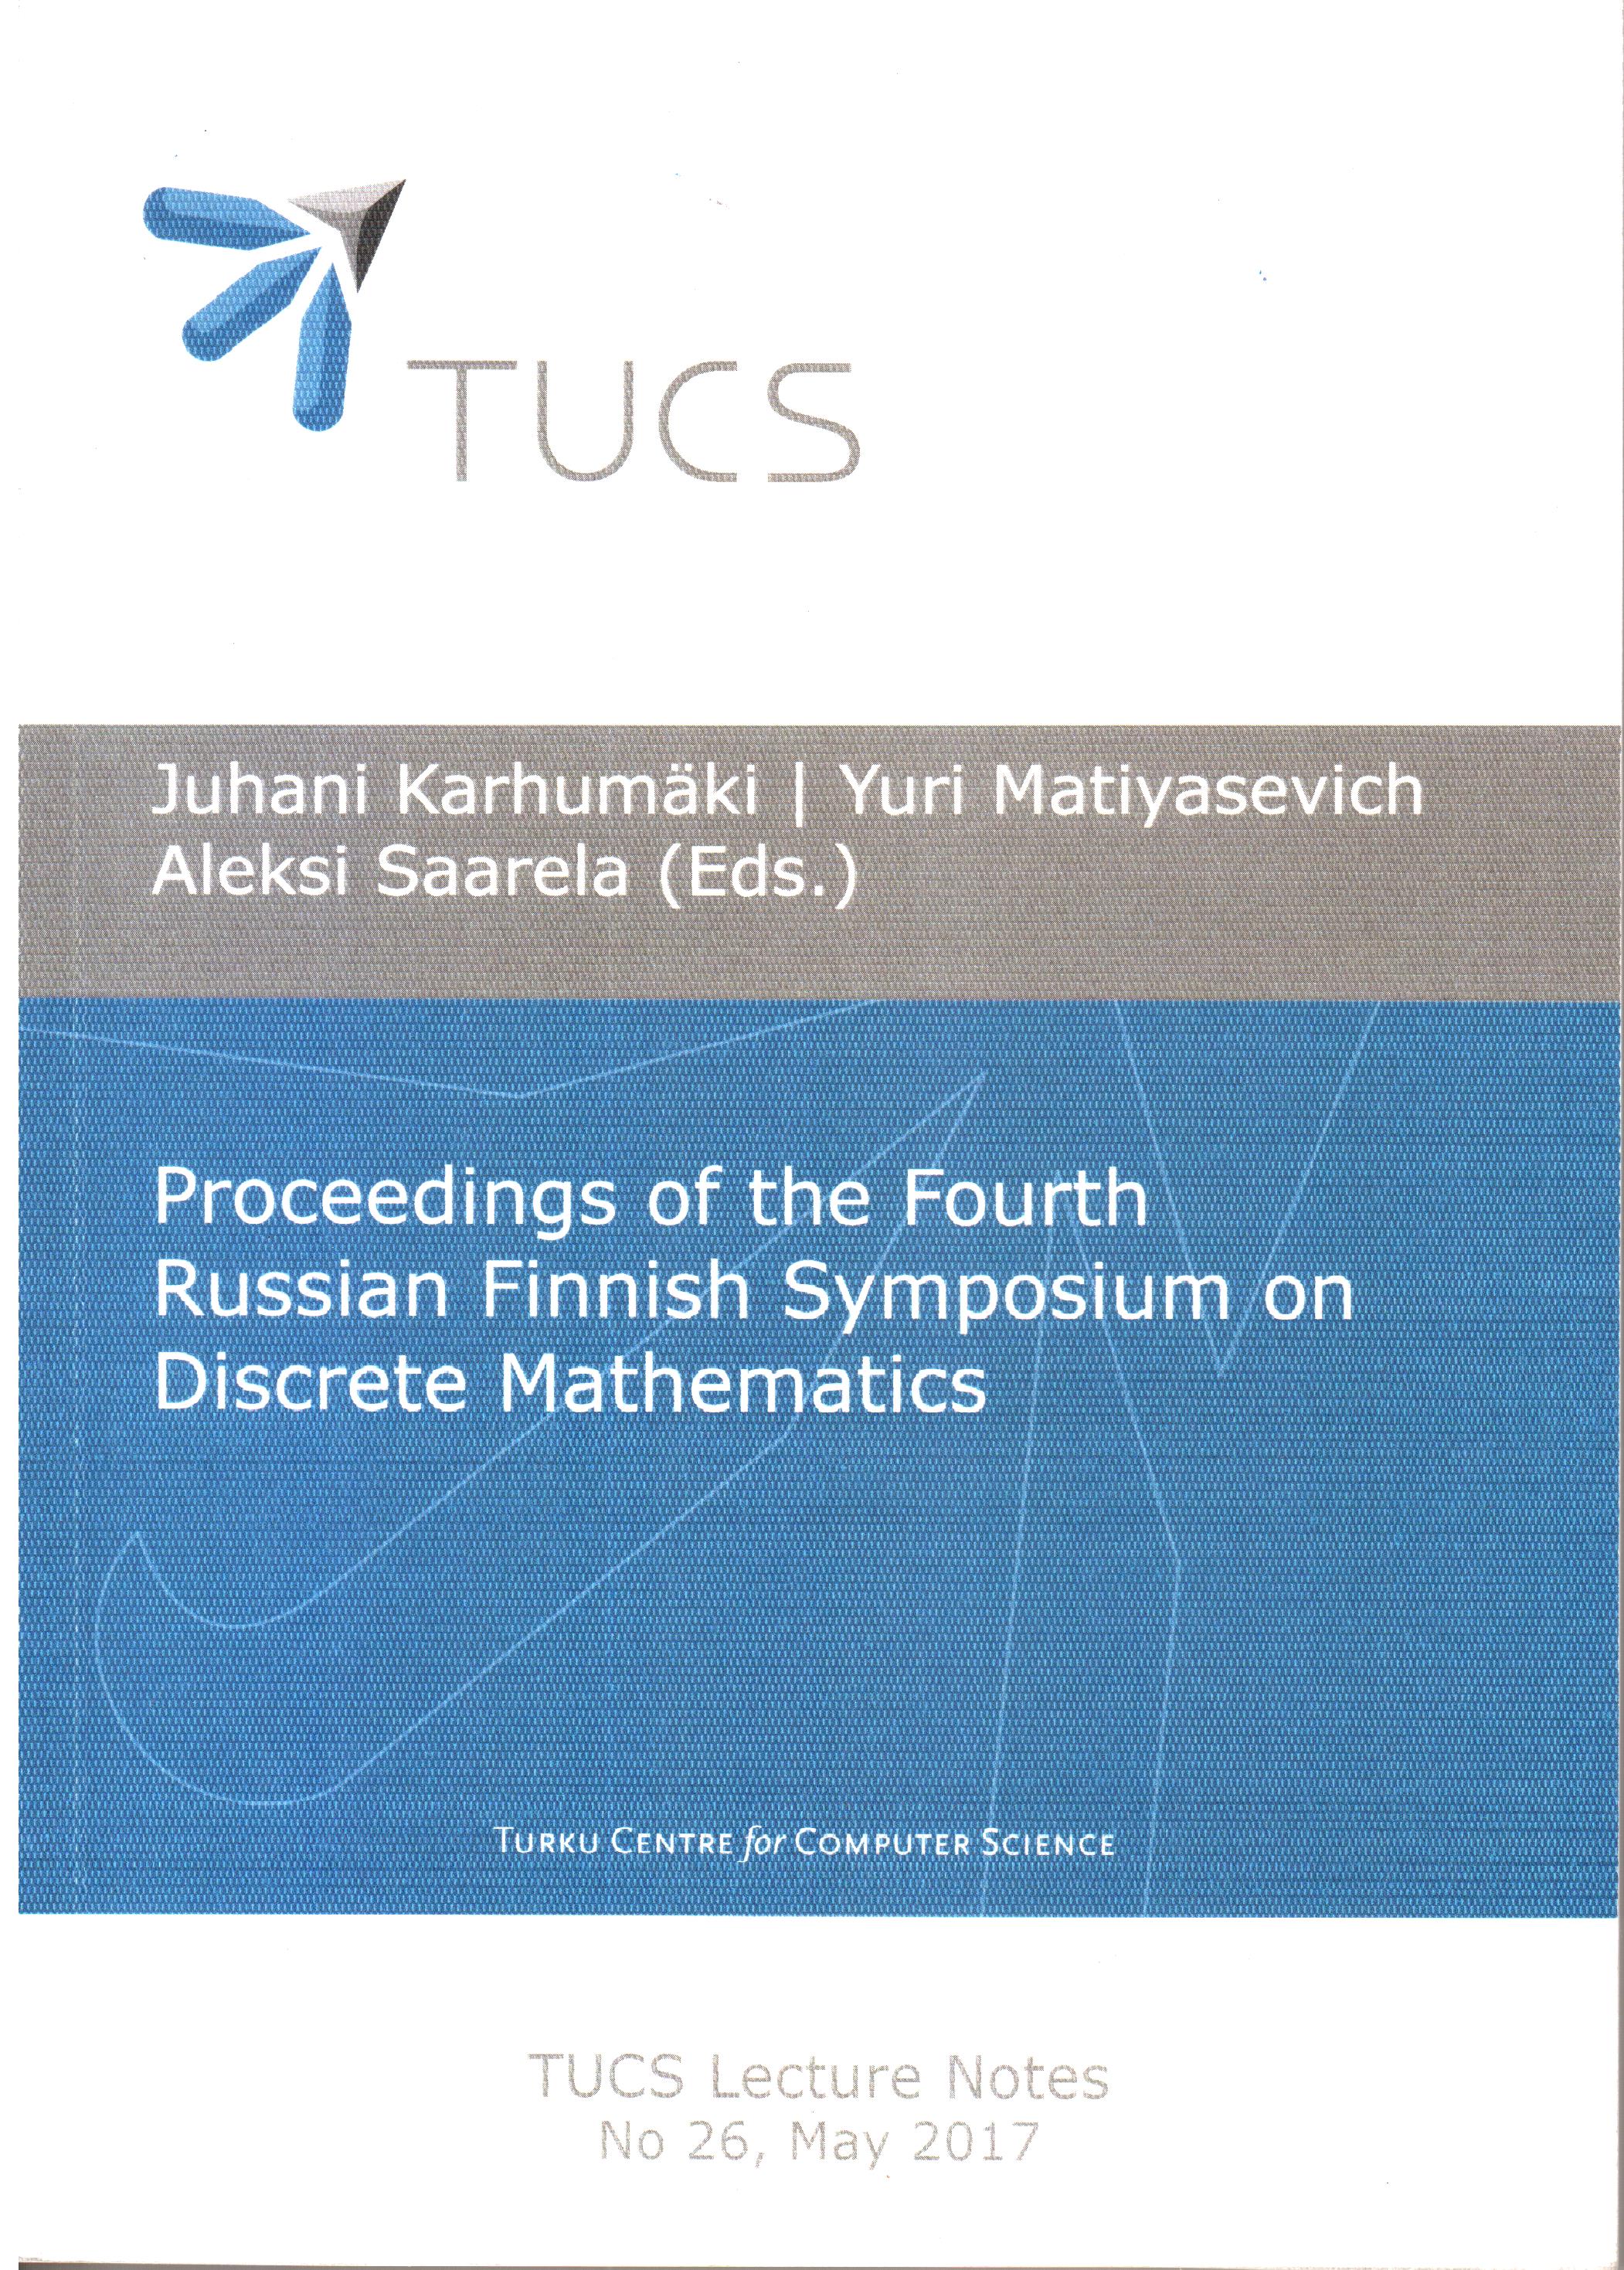 Proceedings of the Fourth Russian Finnish Symposium on Discrete Mathematics